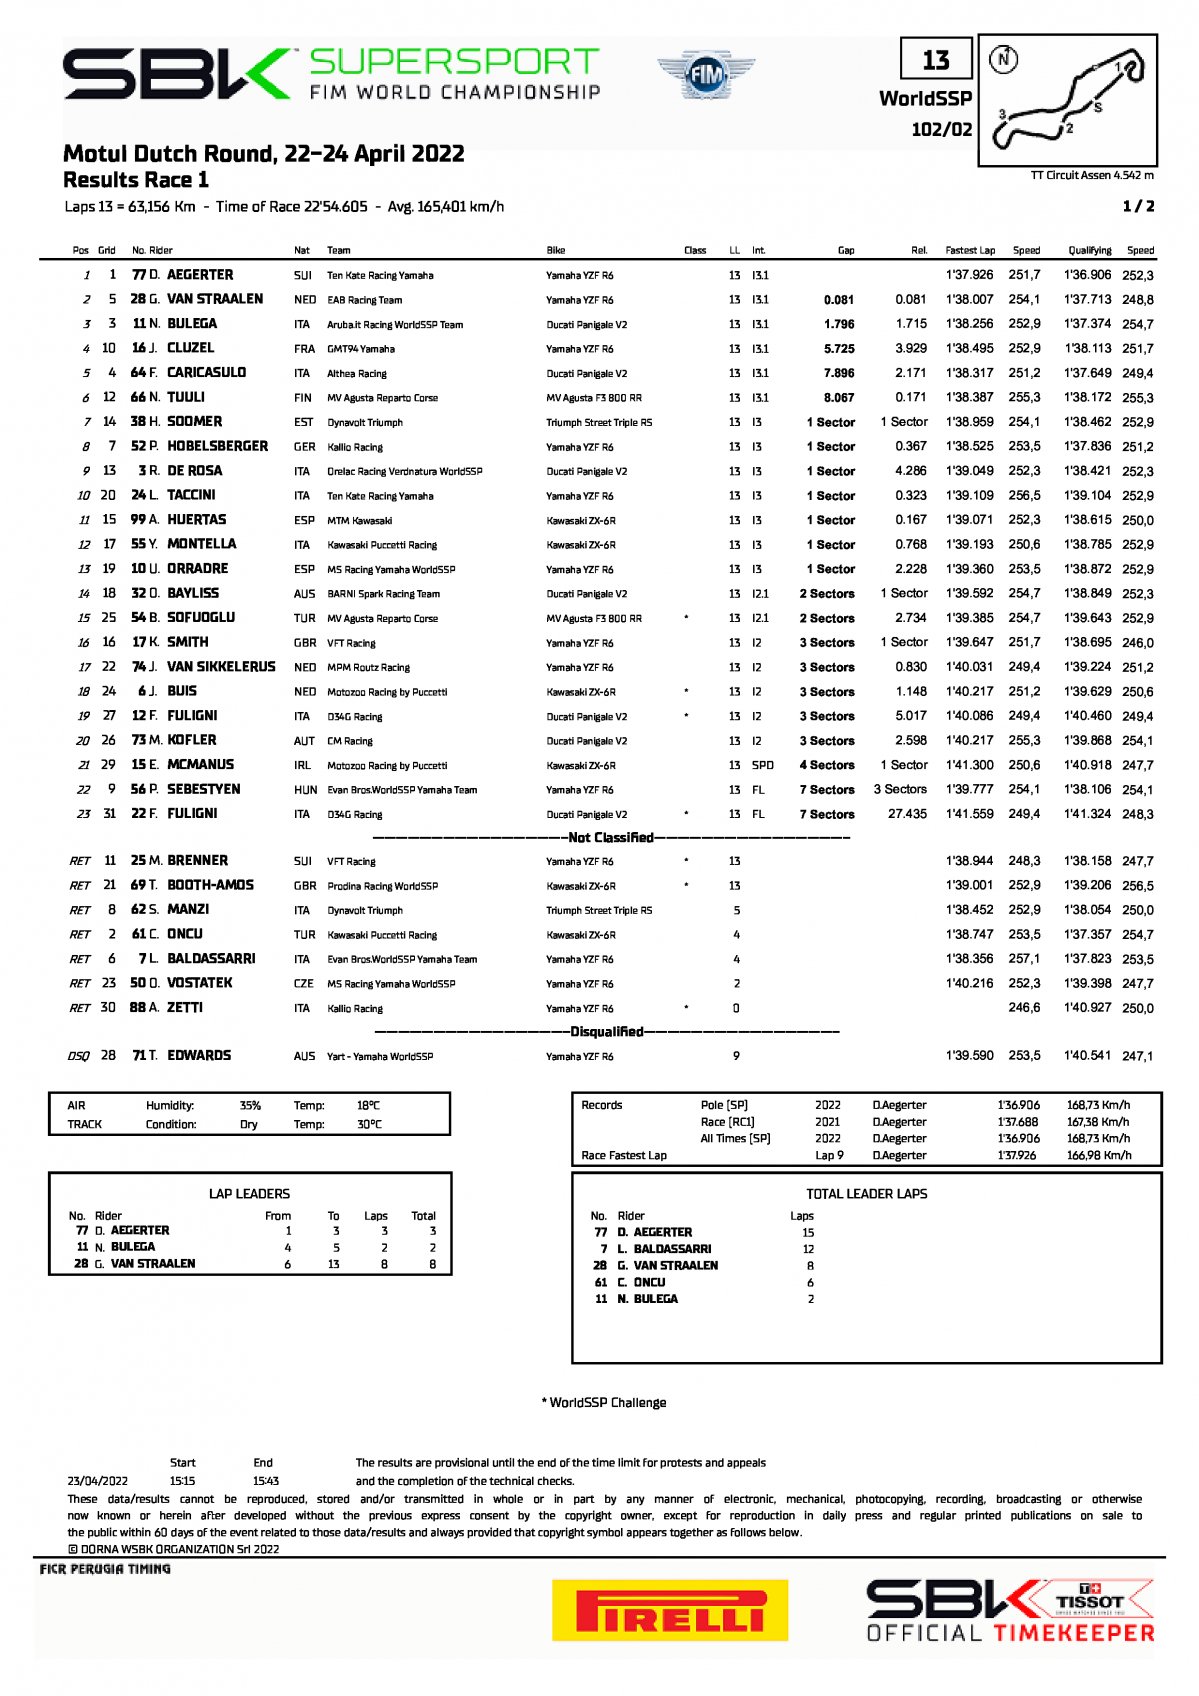 Результаты 1 гонки World Supersport, TT Circuit Assen (23/04/2022)